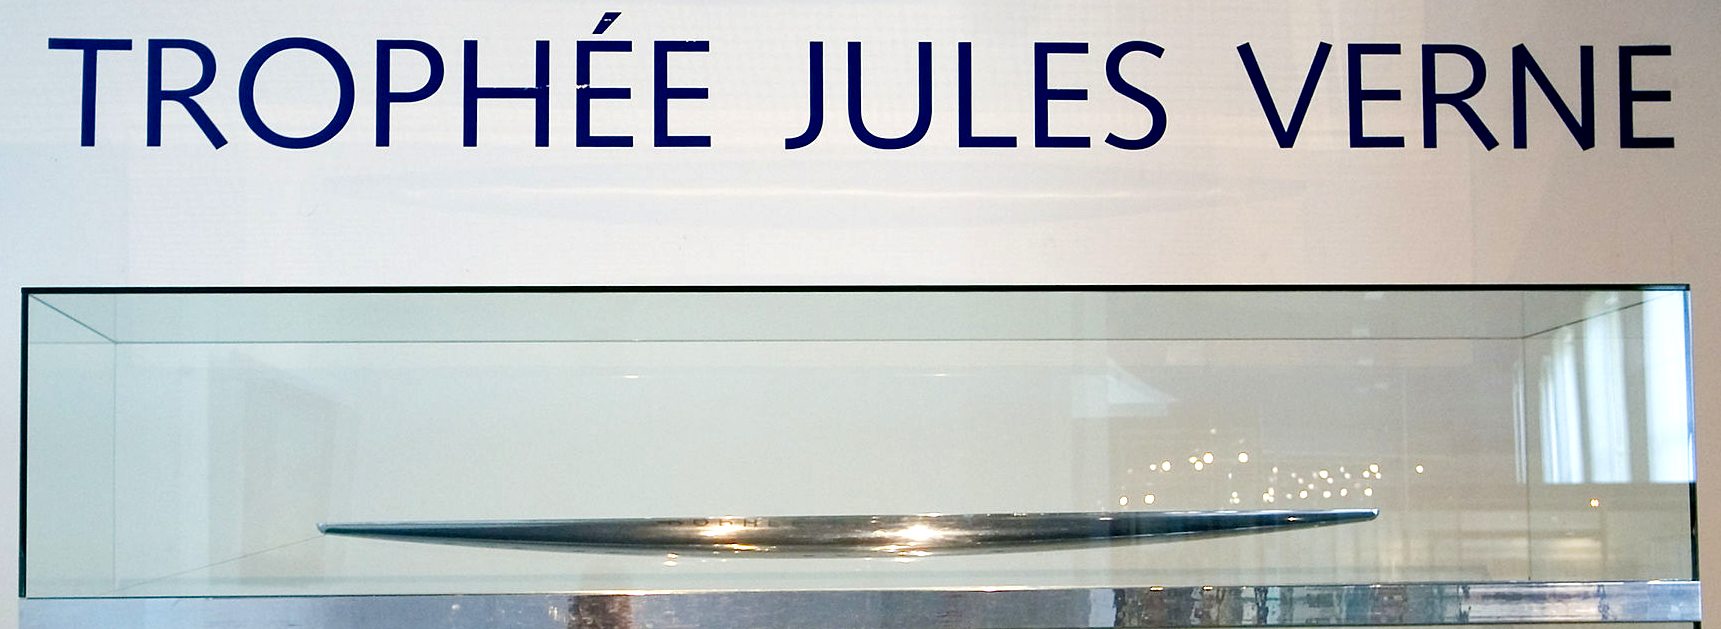 Jules Verne Trophee, at the National Maritime Museum in Paris